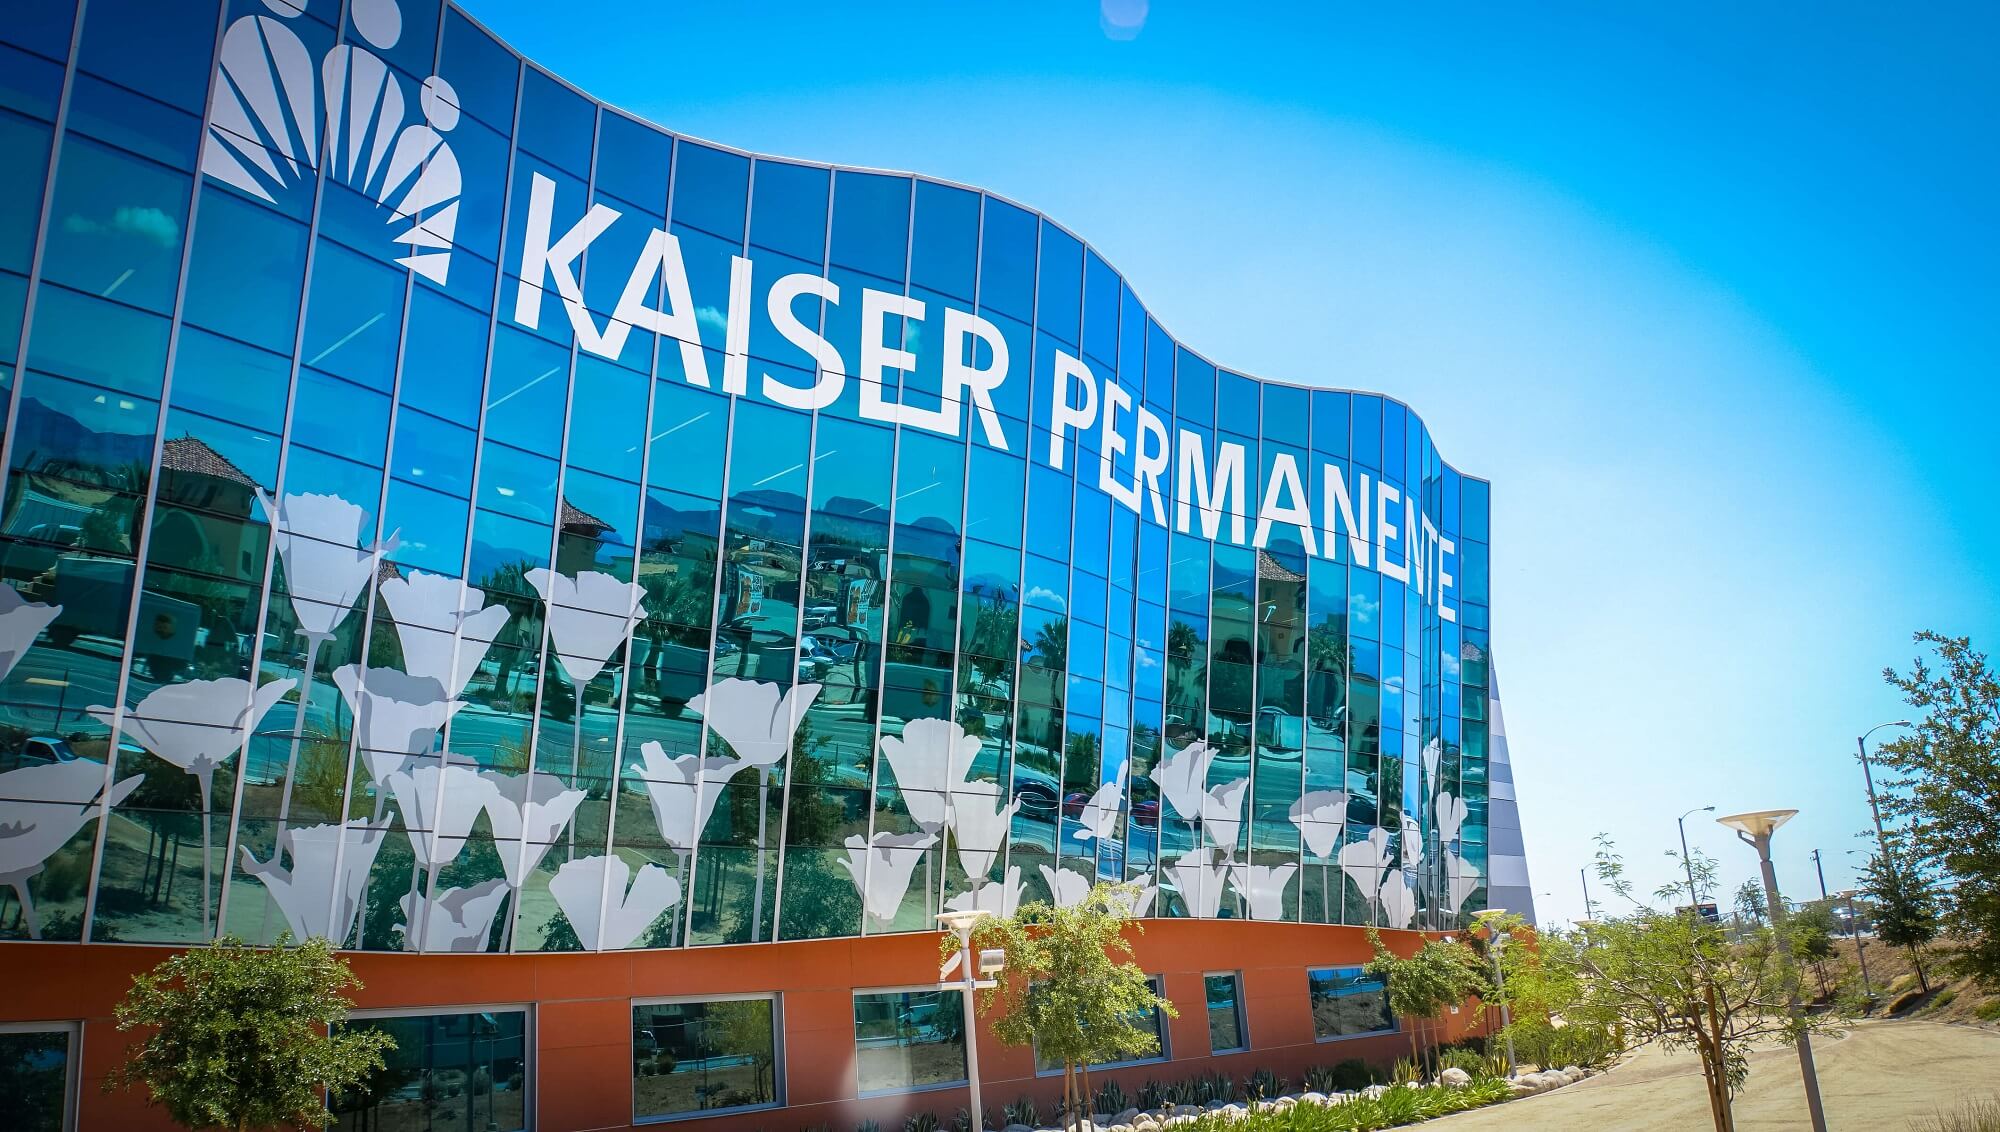 kaiser permanente sees $961m net loss, negative margins in q1